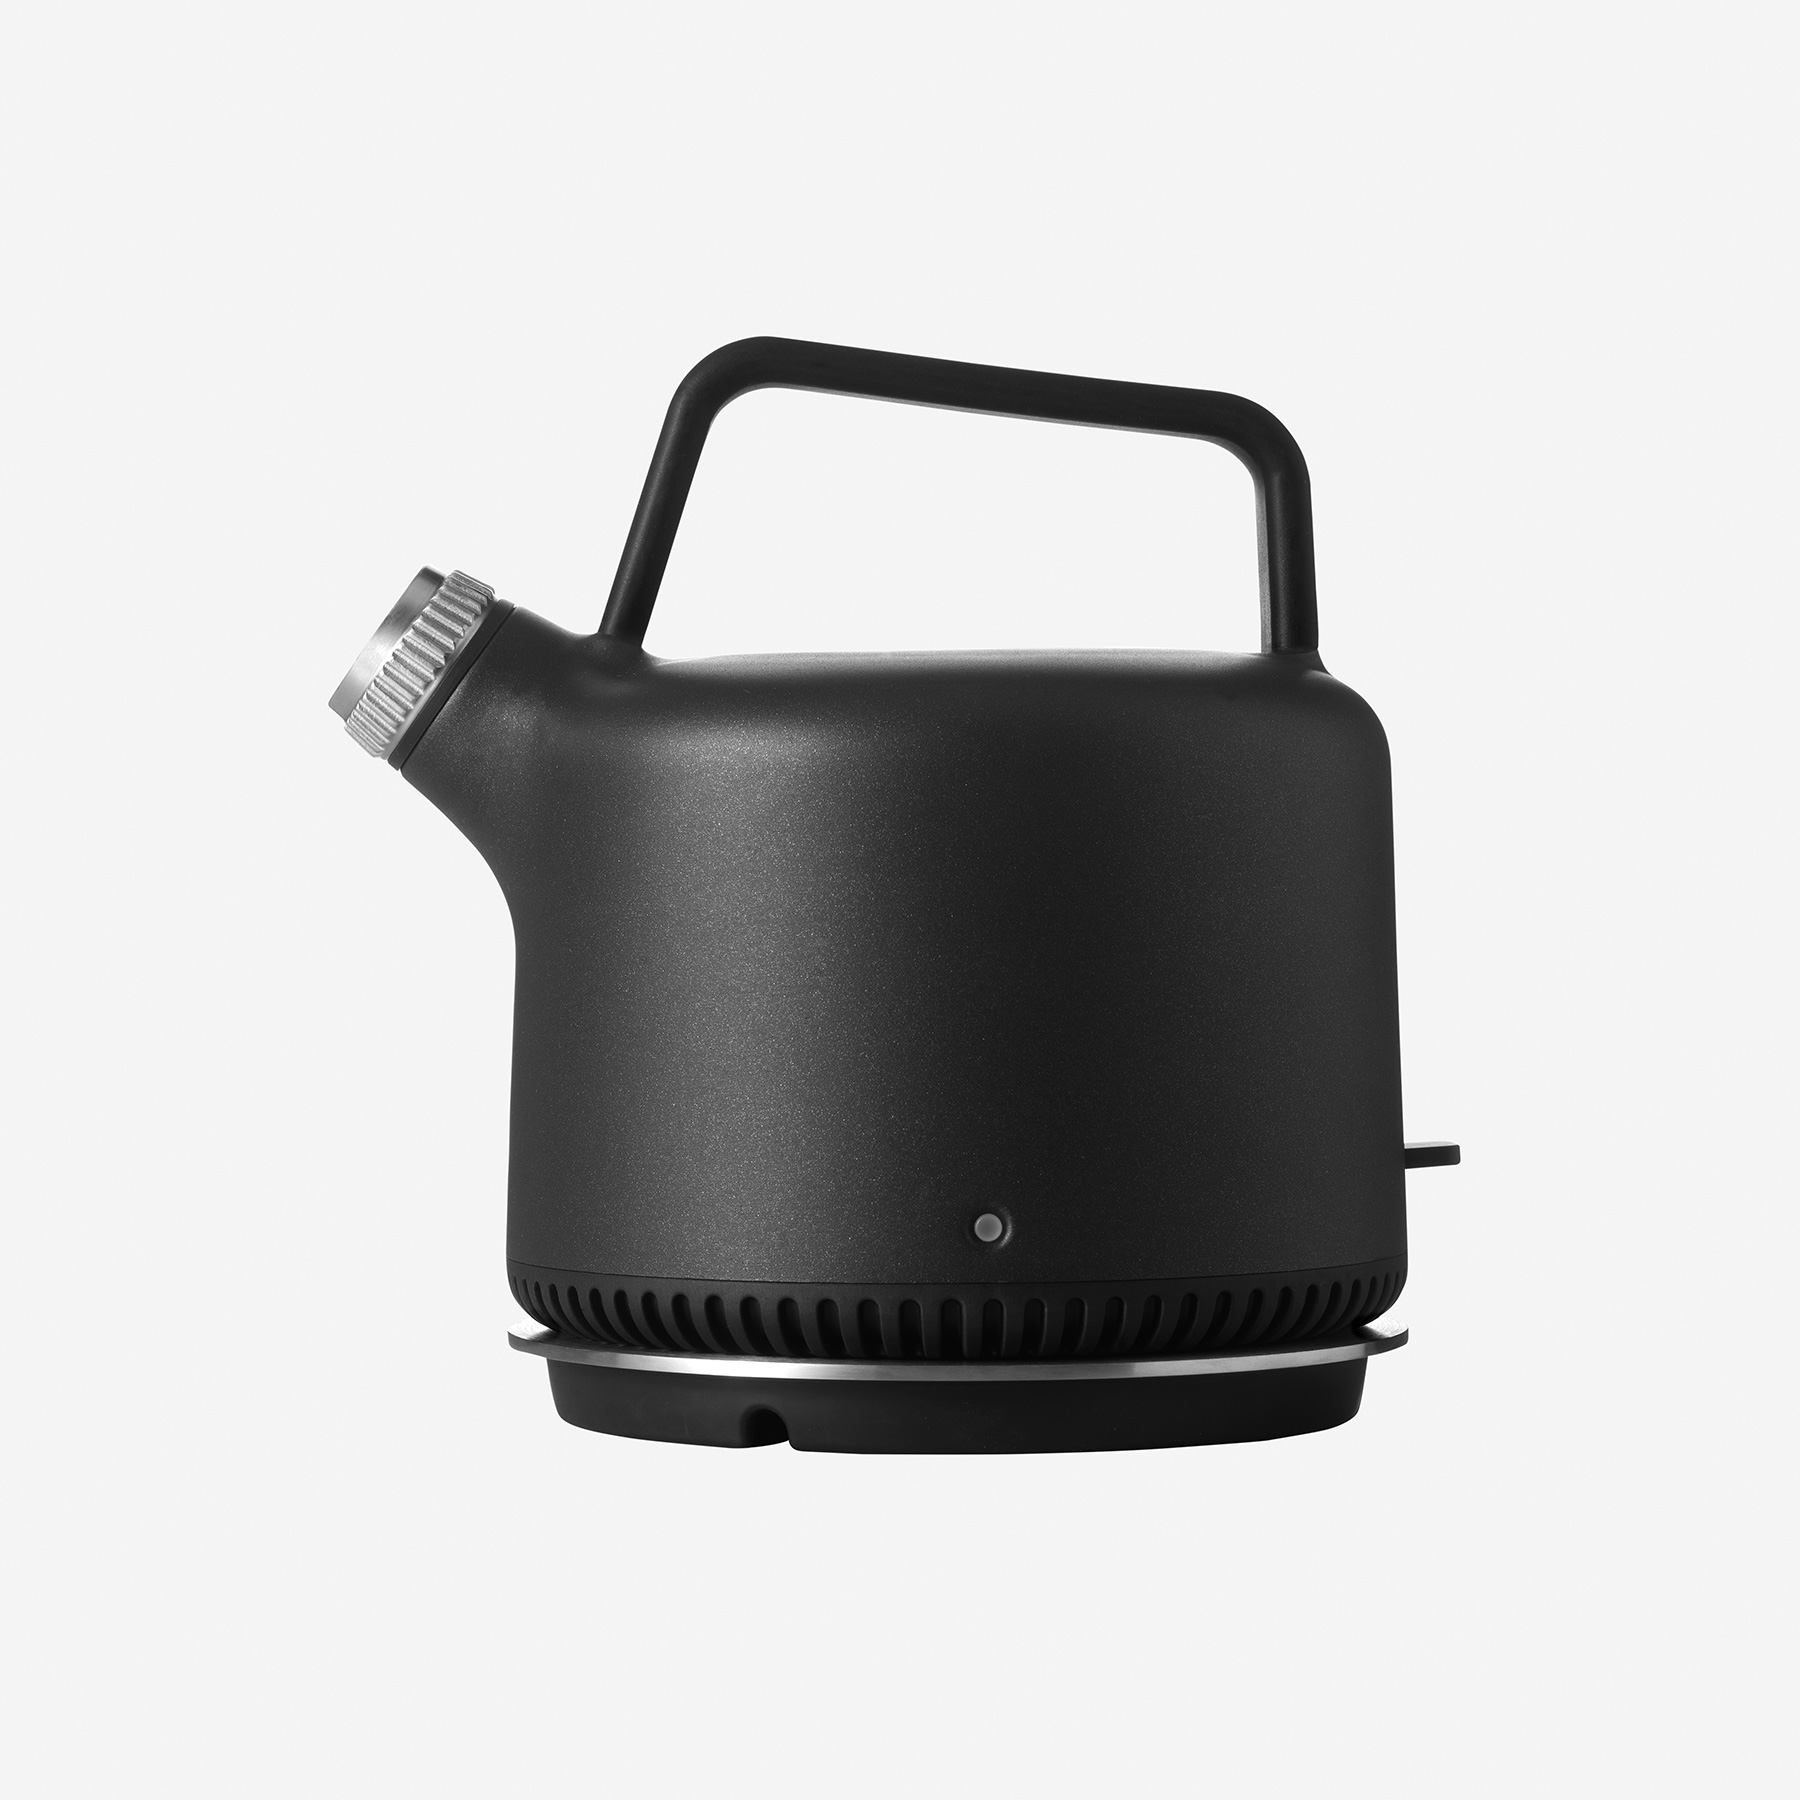 https://vipp.com/sites/default/files/vipp501-electric-kettle-2.jpg